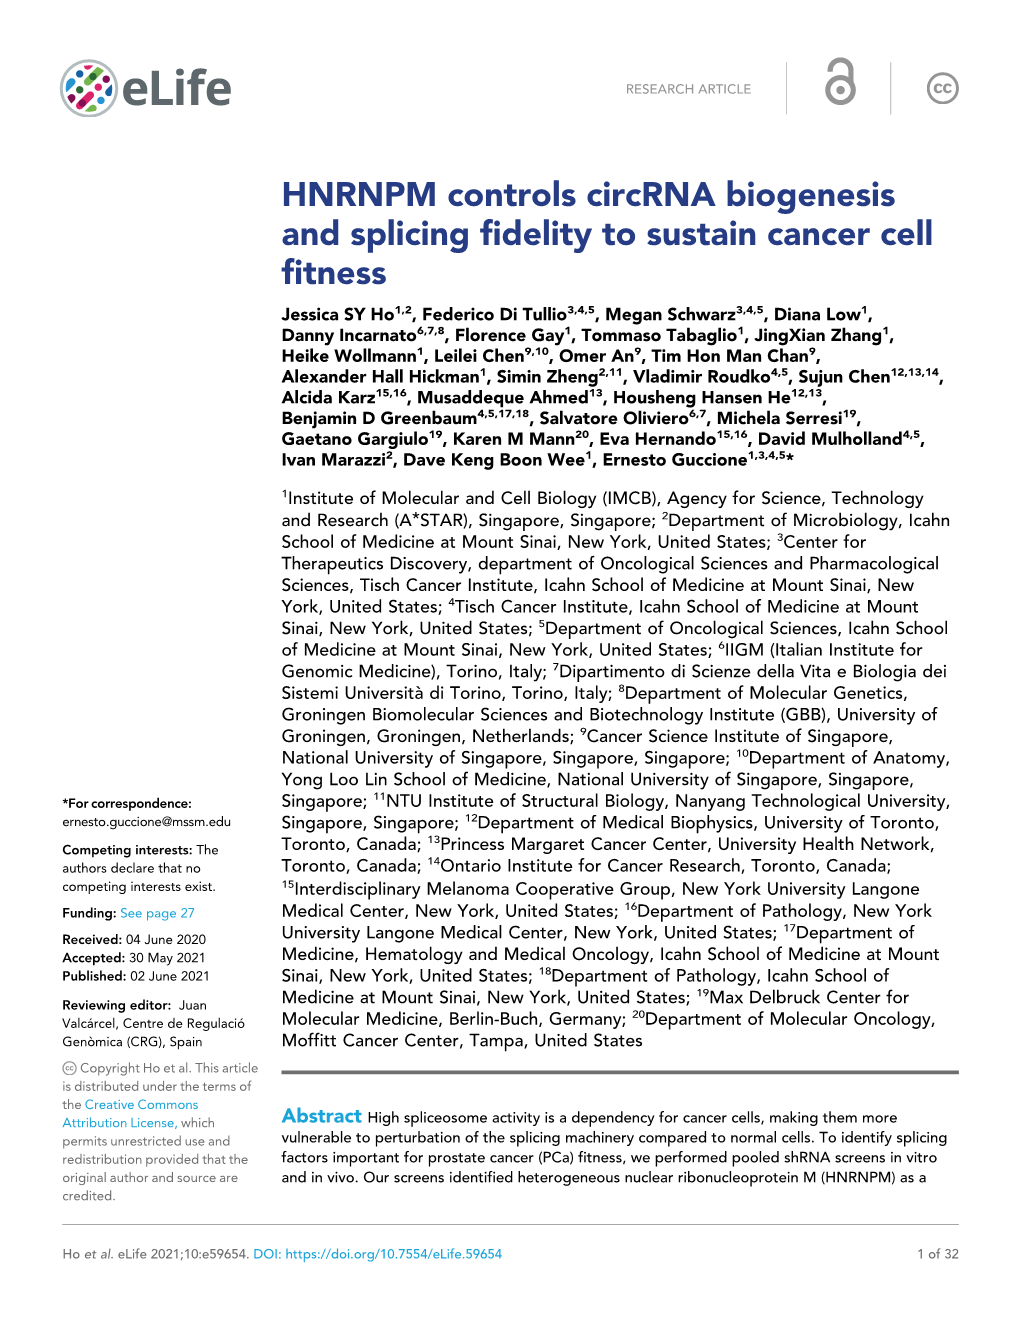 HNRNPM Controls Circrna Biogenesis and Splicing Fidelity To